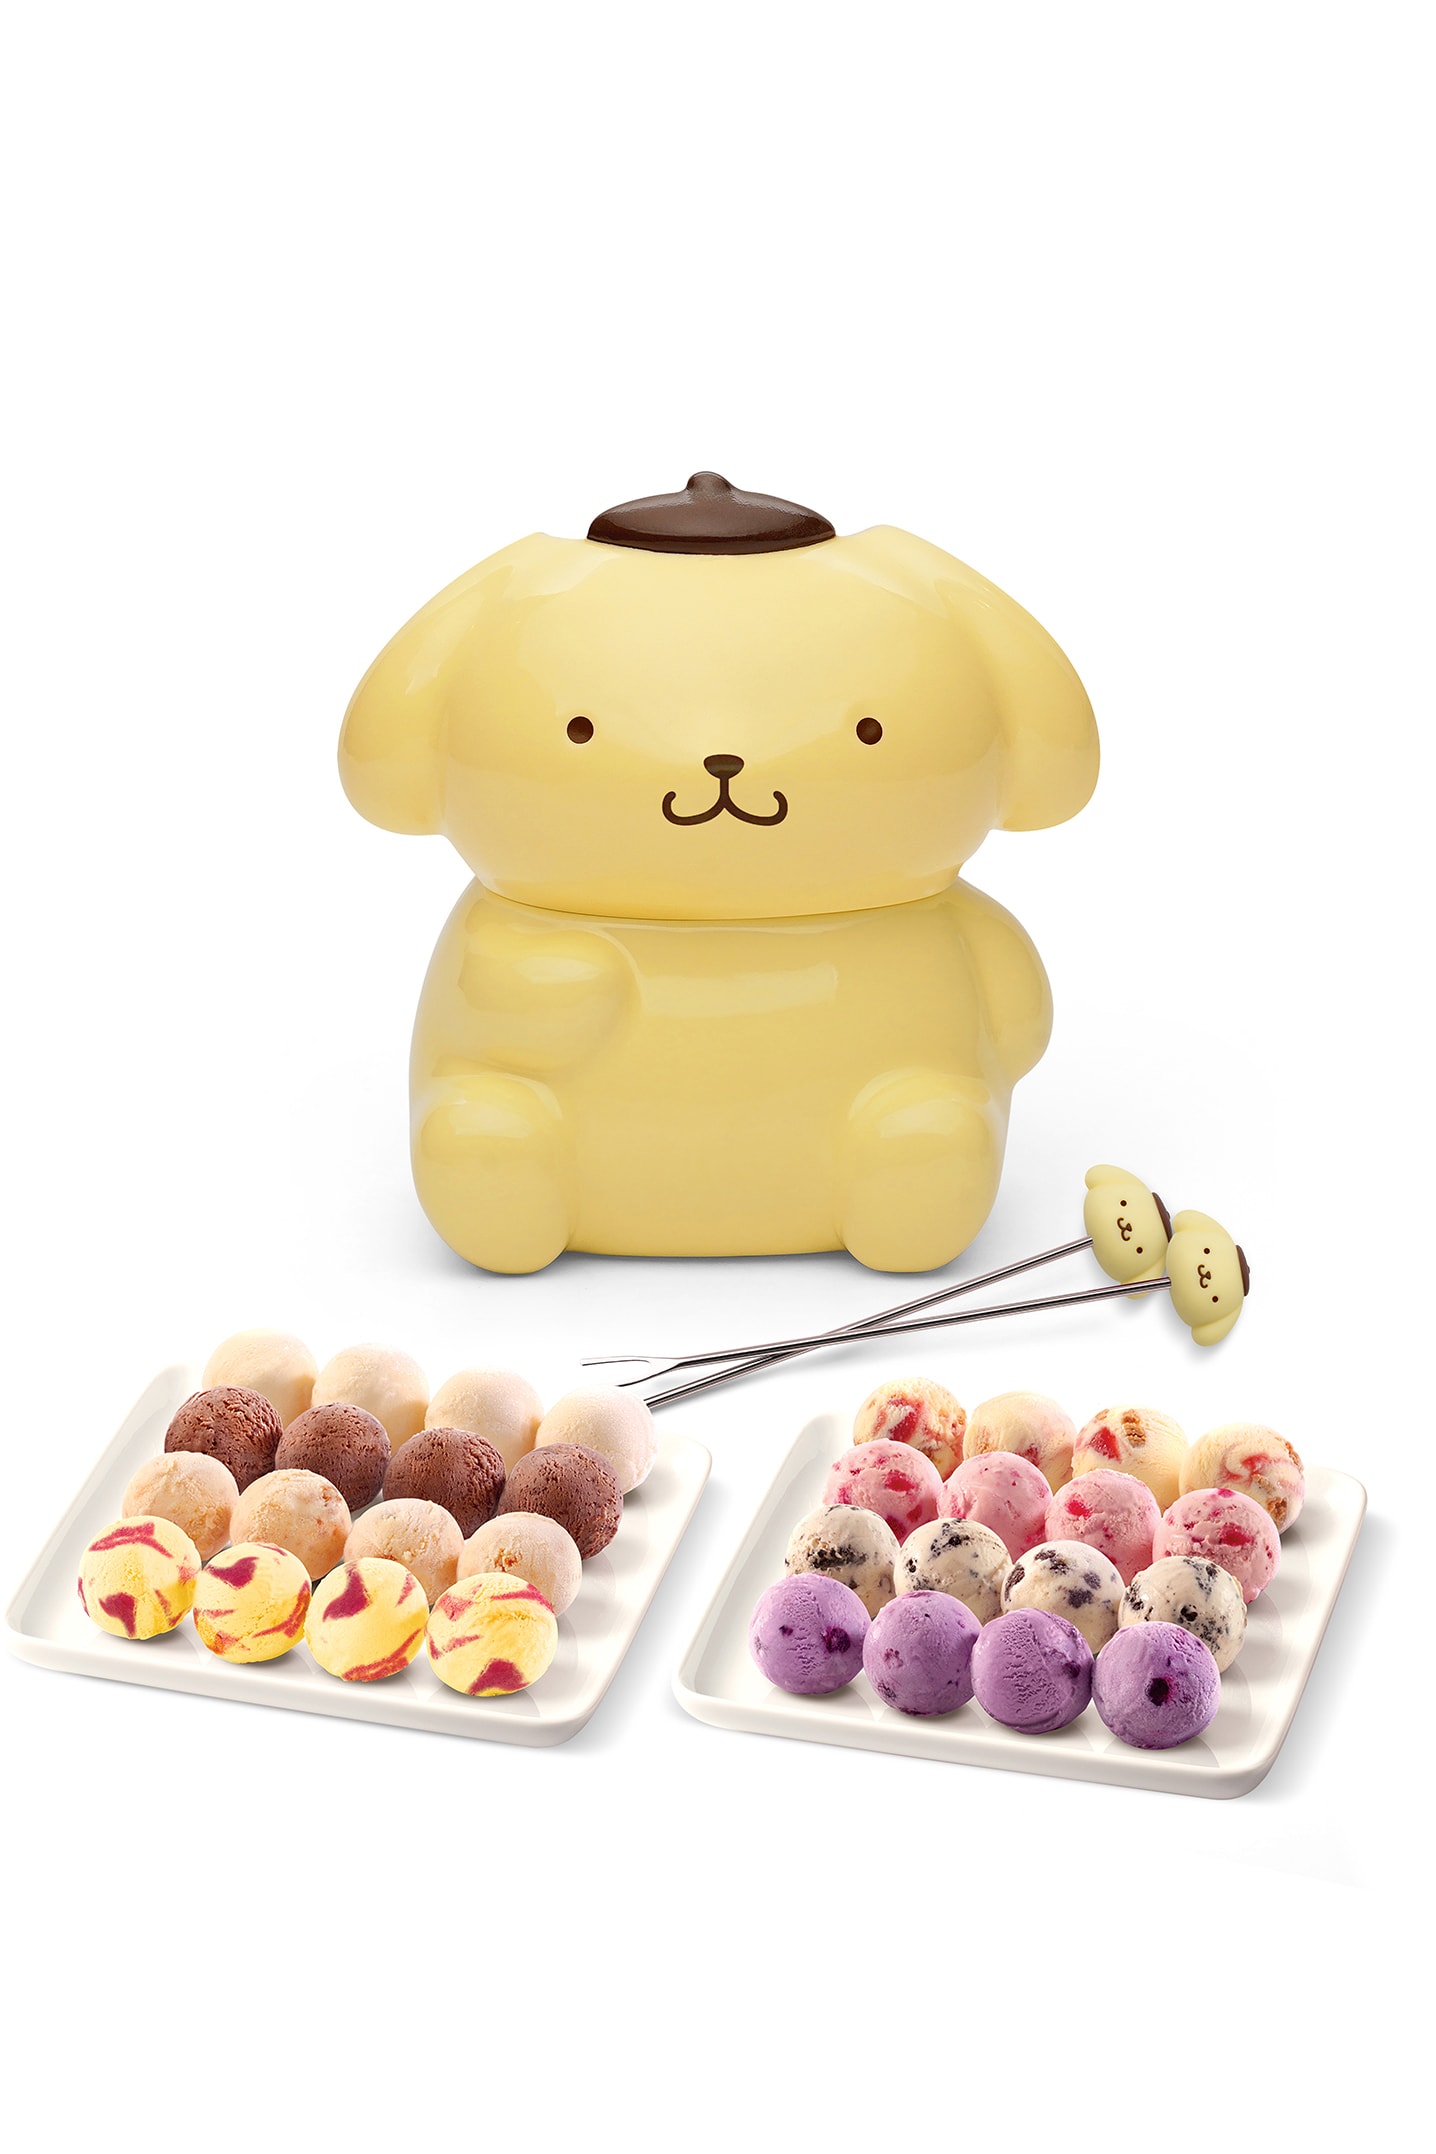 Häagen-Dazs Sanrio Chocolate Fondue Collaboration Hello Kitty Pompompurin My Melody 